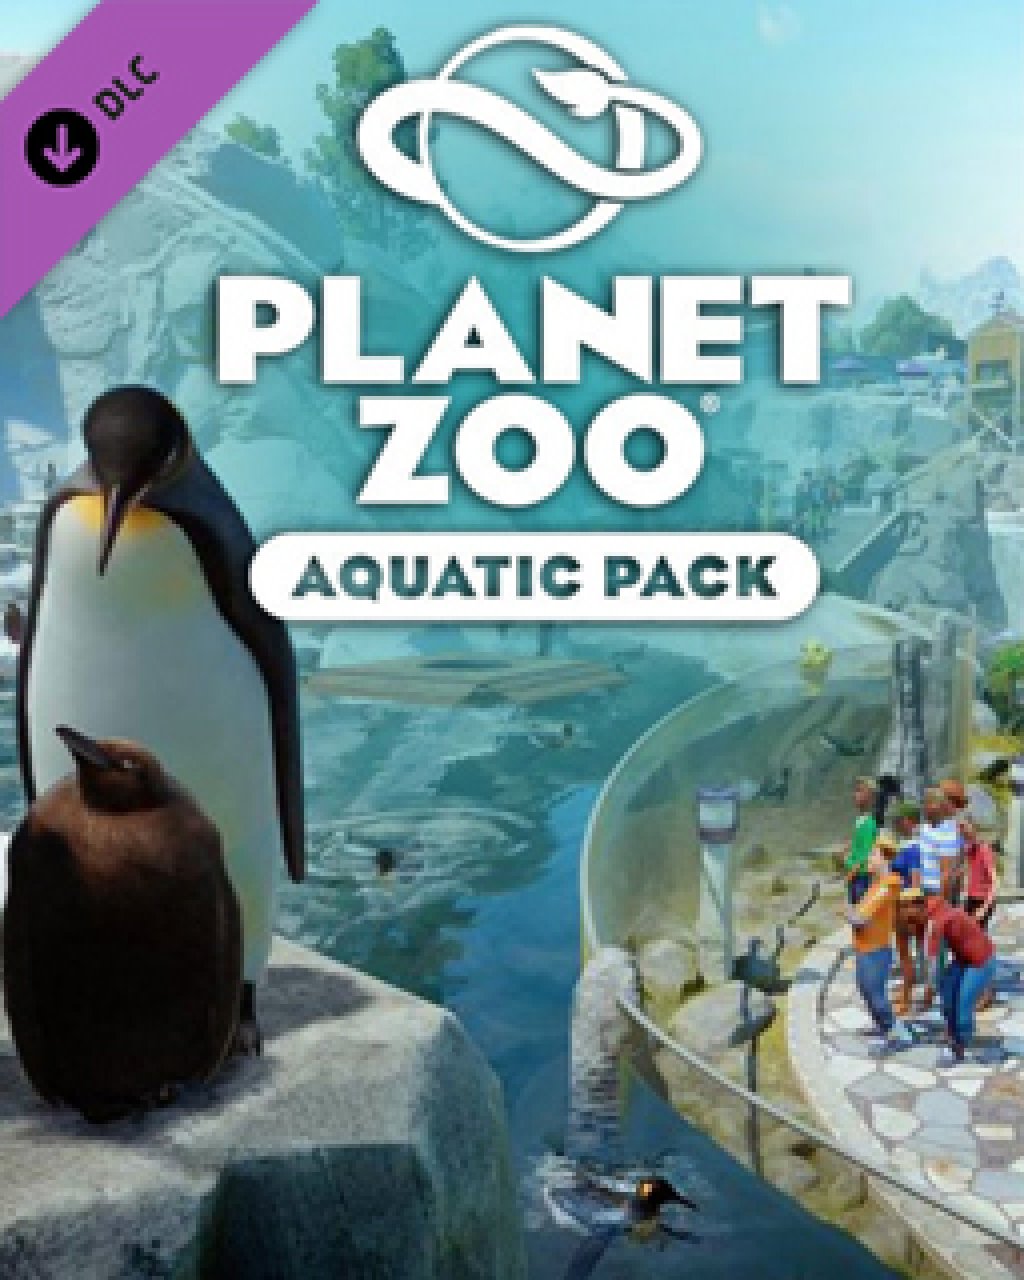 ESD Planet Zoo Aquatic Pack